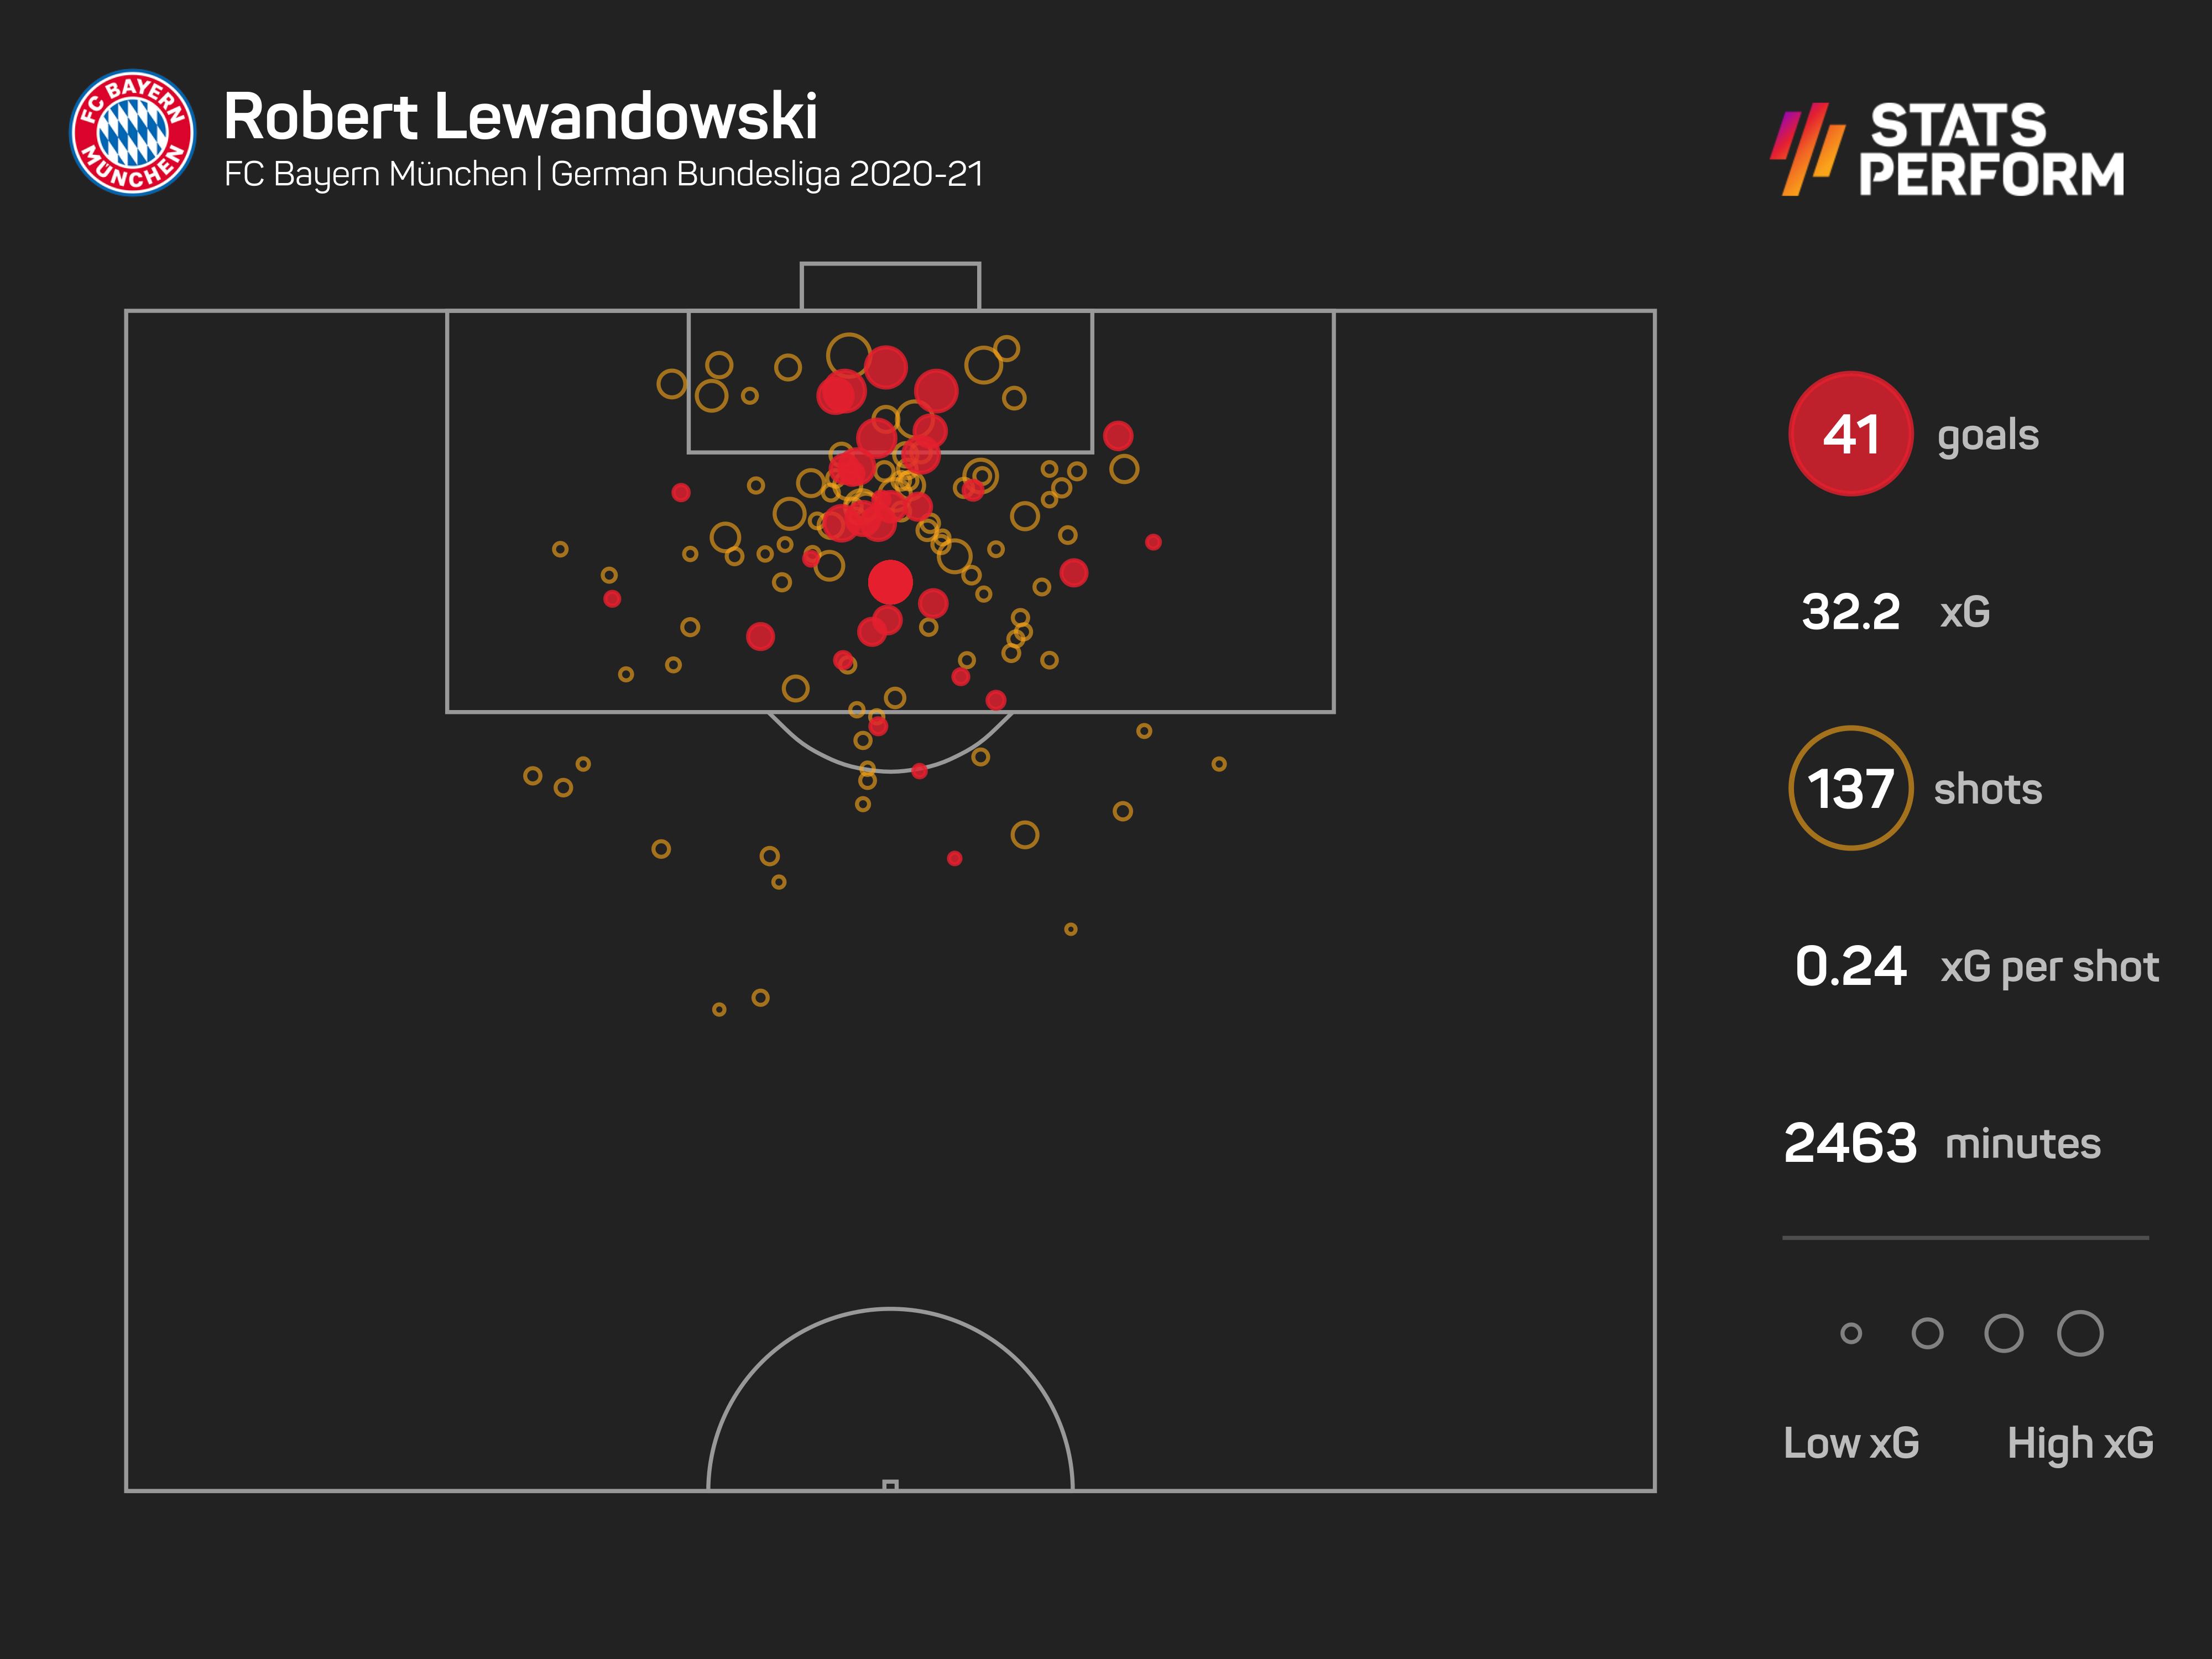 Robert Lewandowski broke Gerd Muller's single-season record